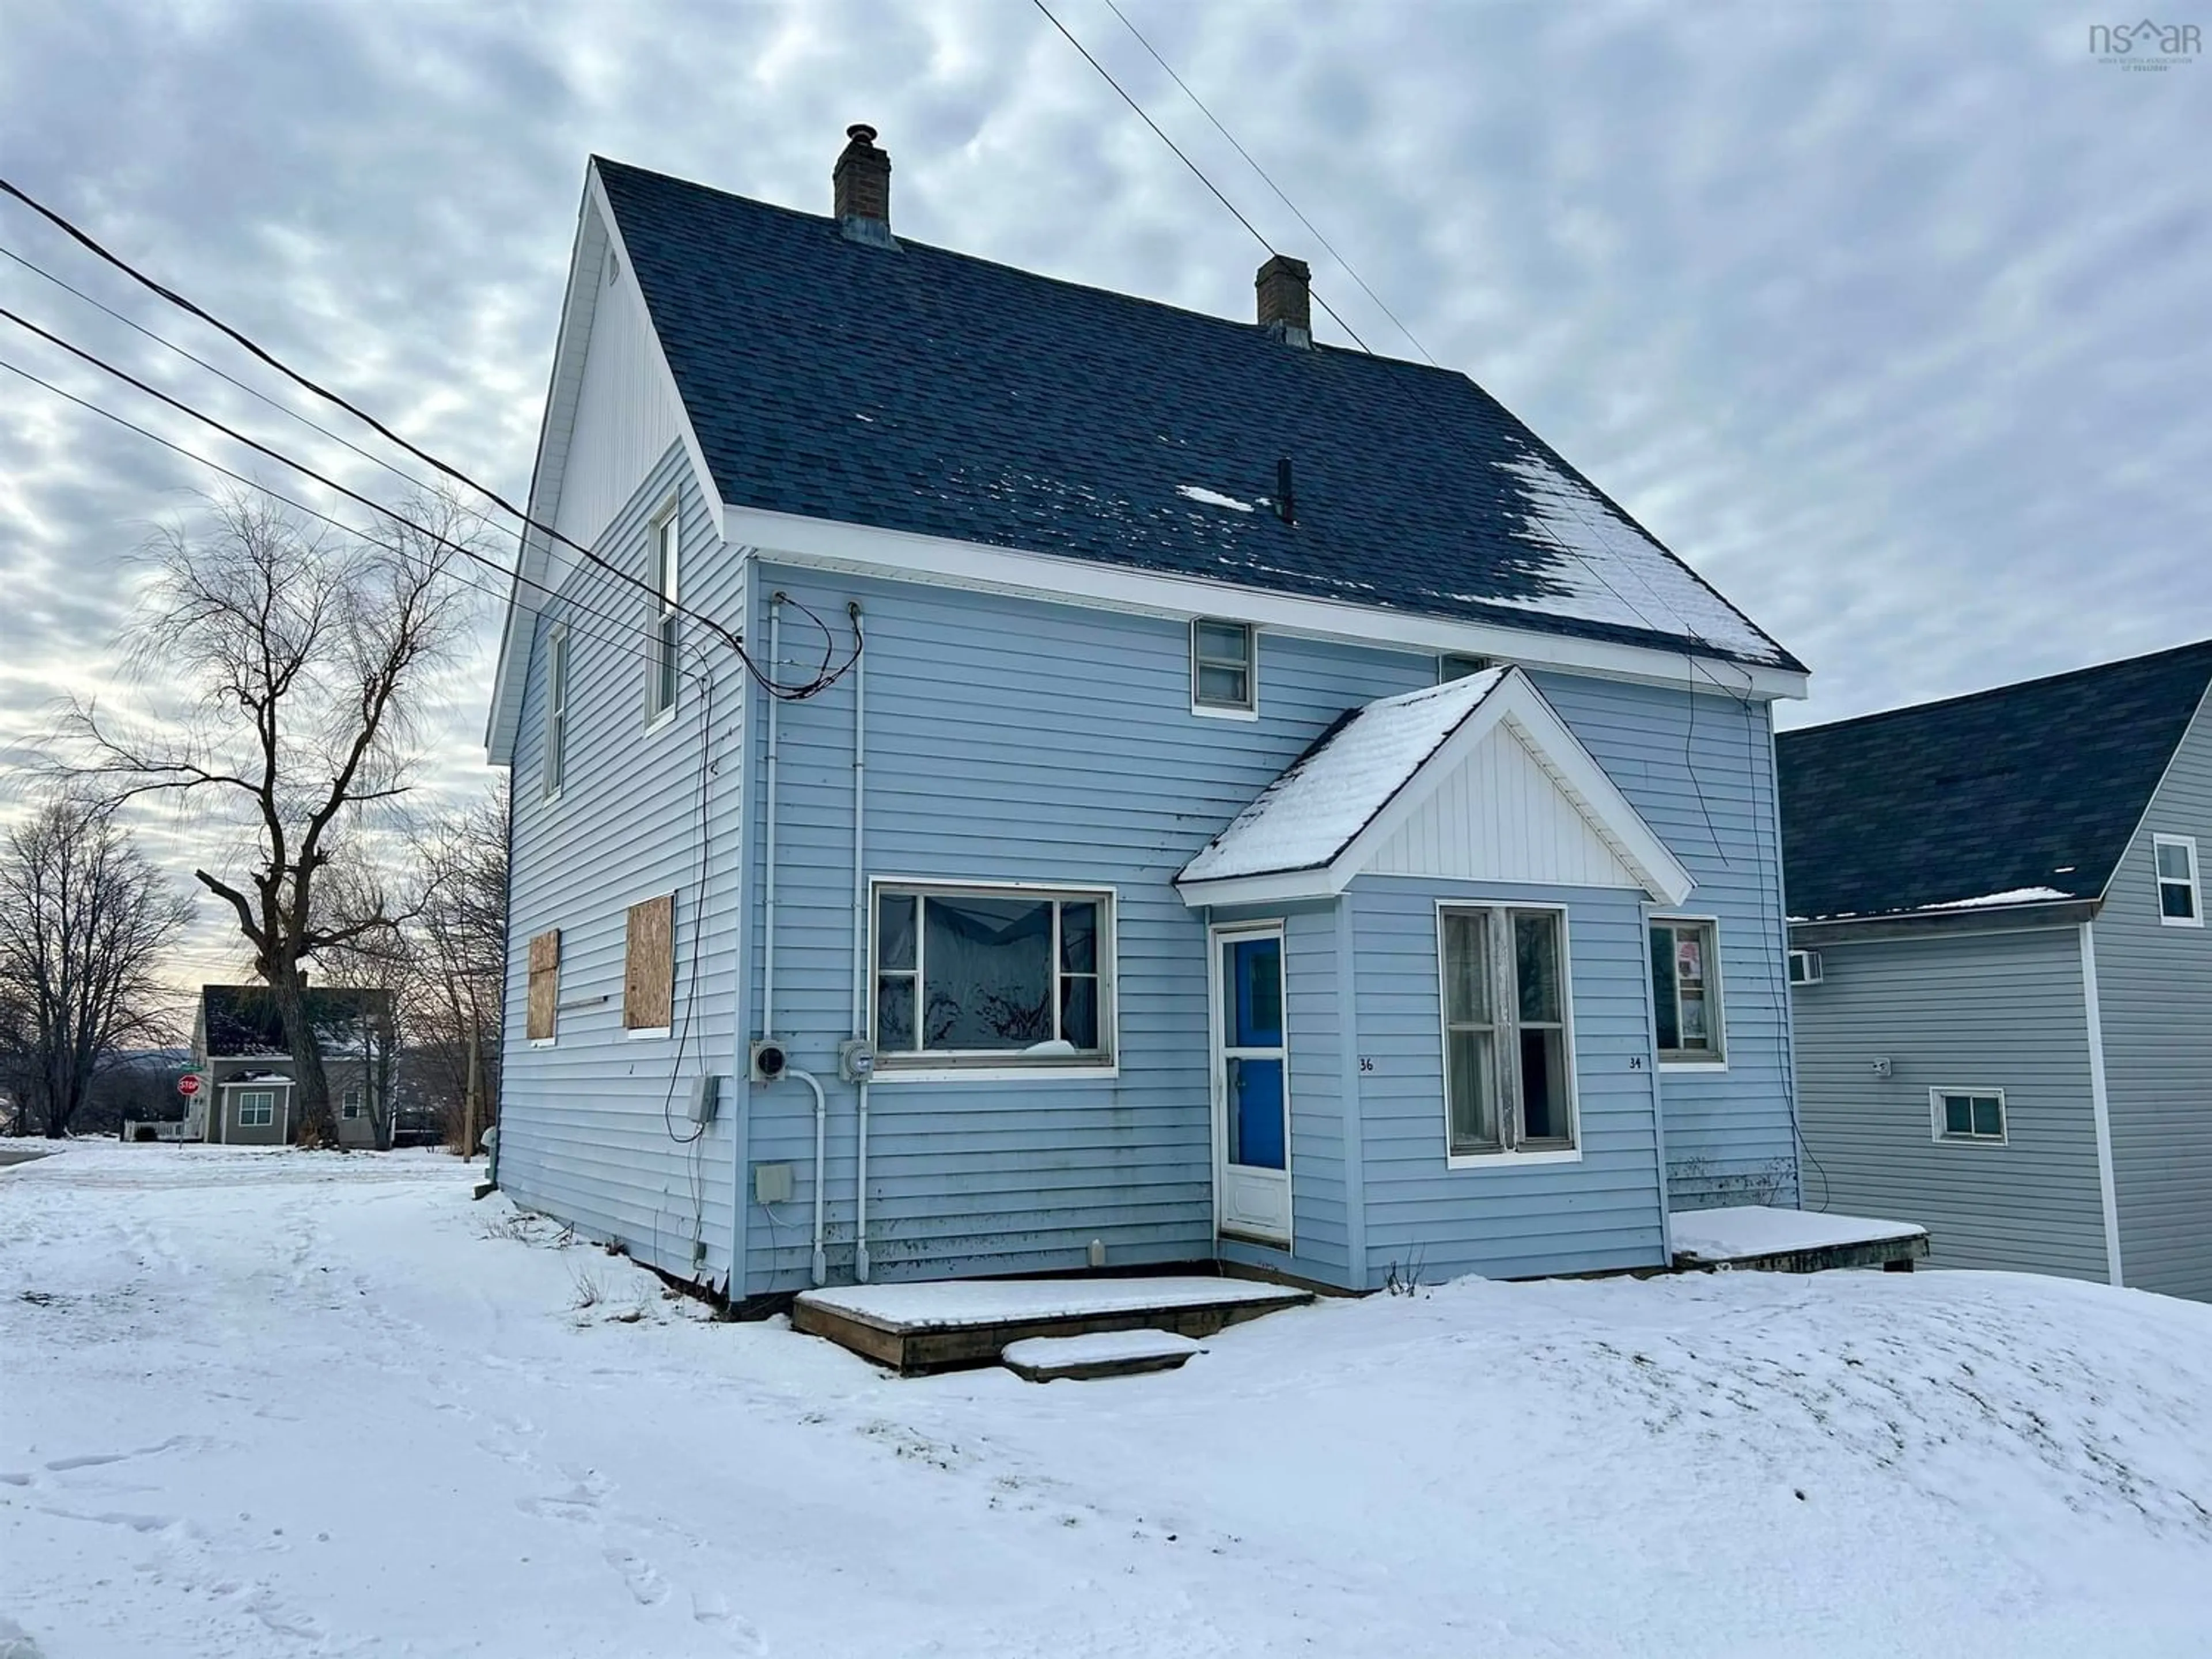 Home with unknown exterior material for 34-36 Diamond St, Trenton Nova Scotia B0K 1X0